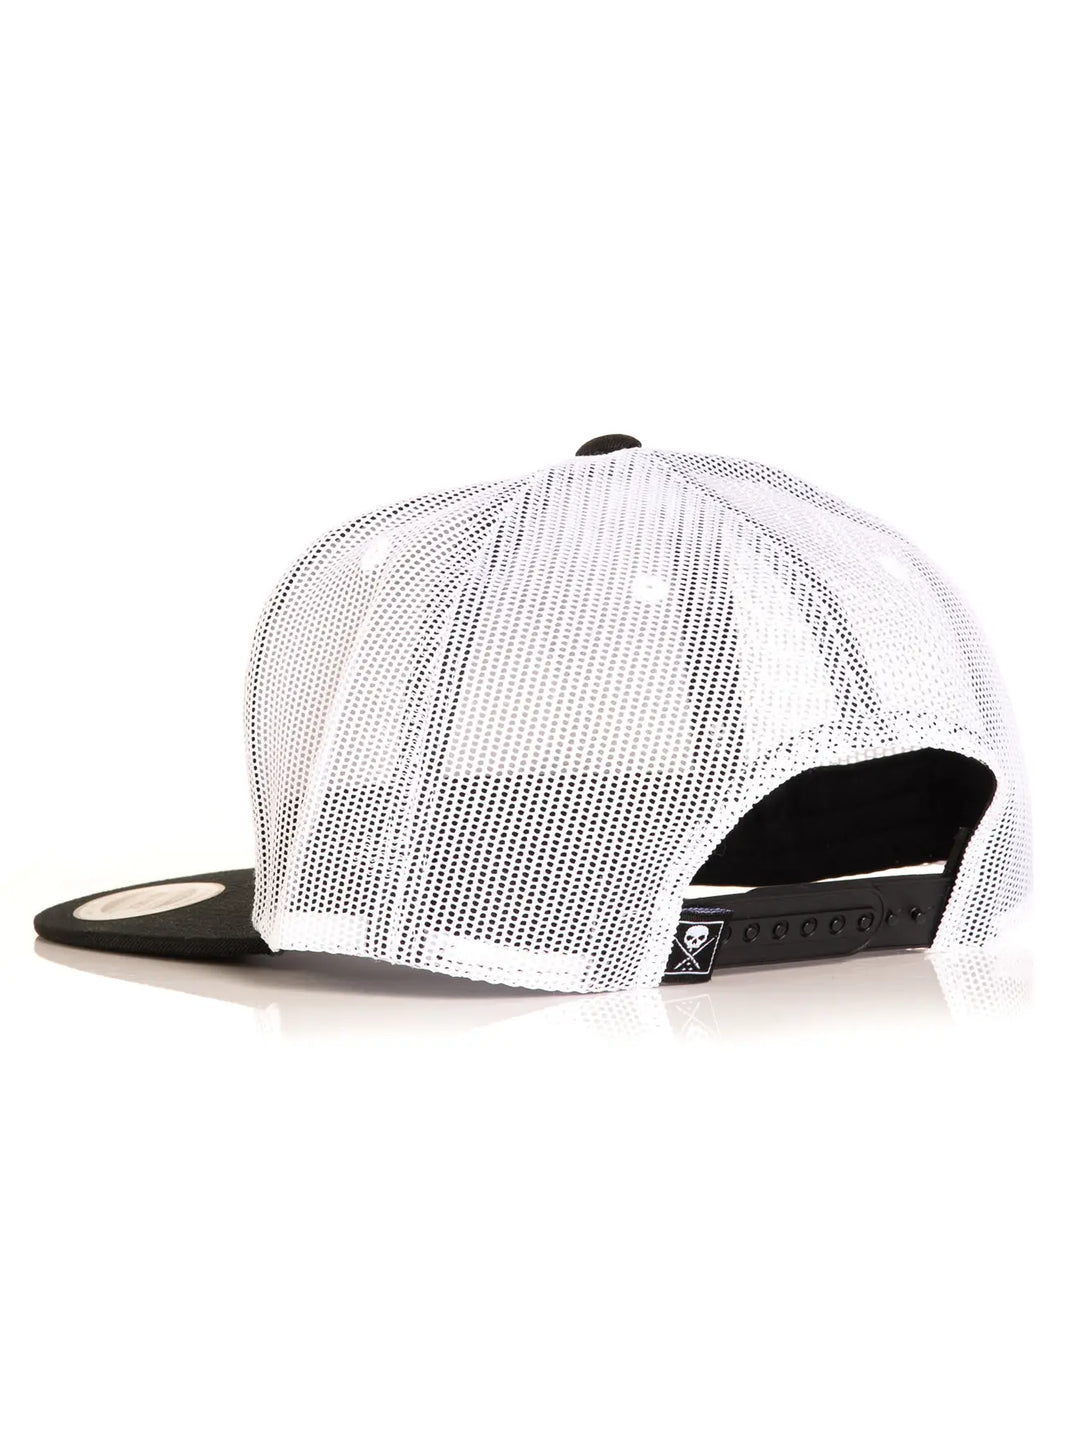 Supply Snapback Mesh Hat - Black/White